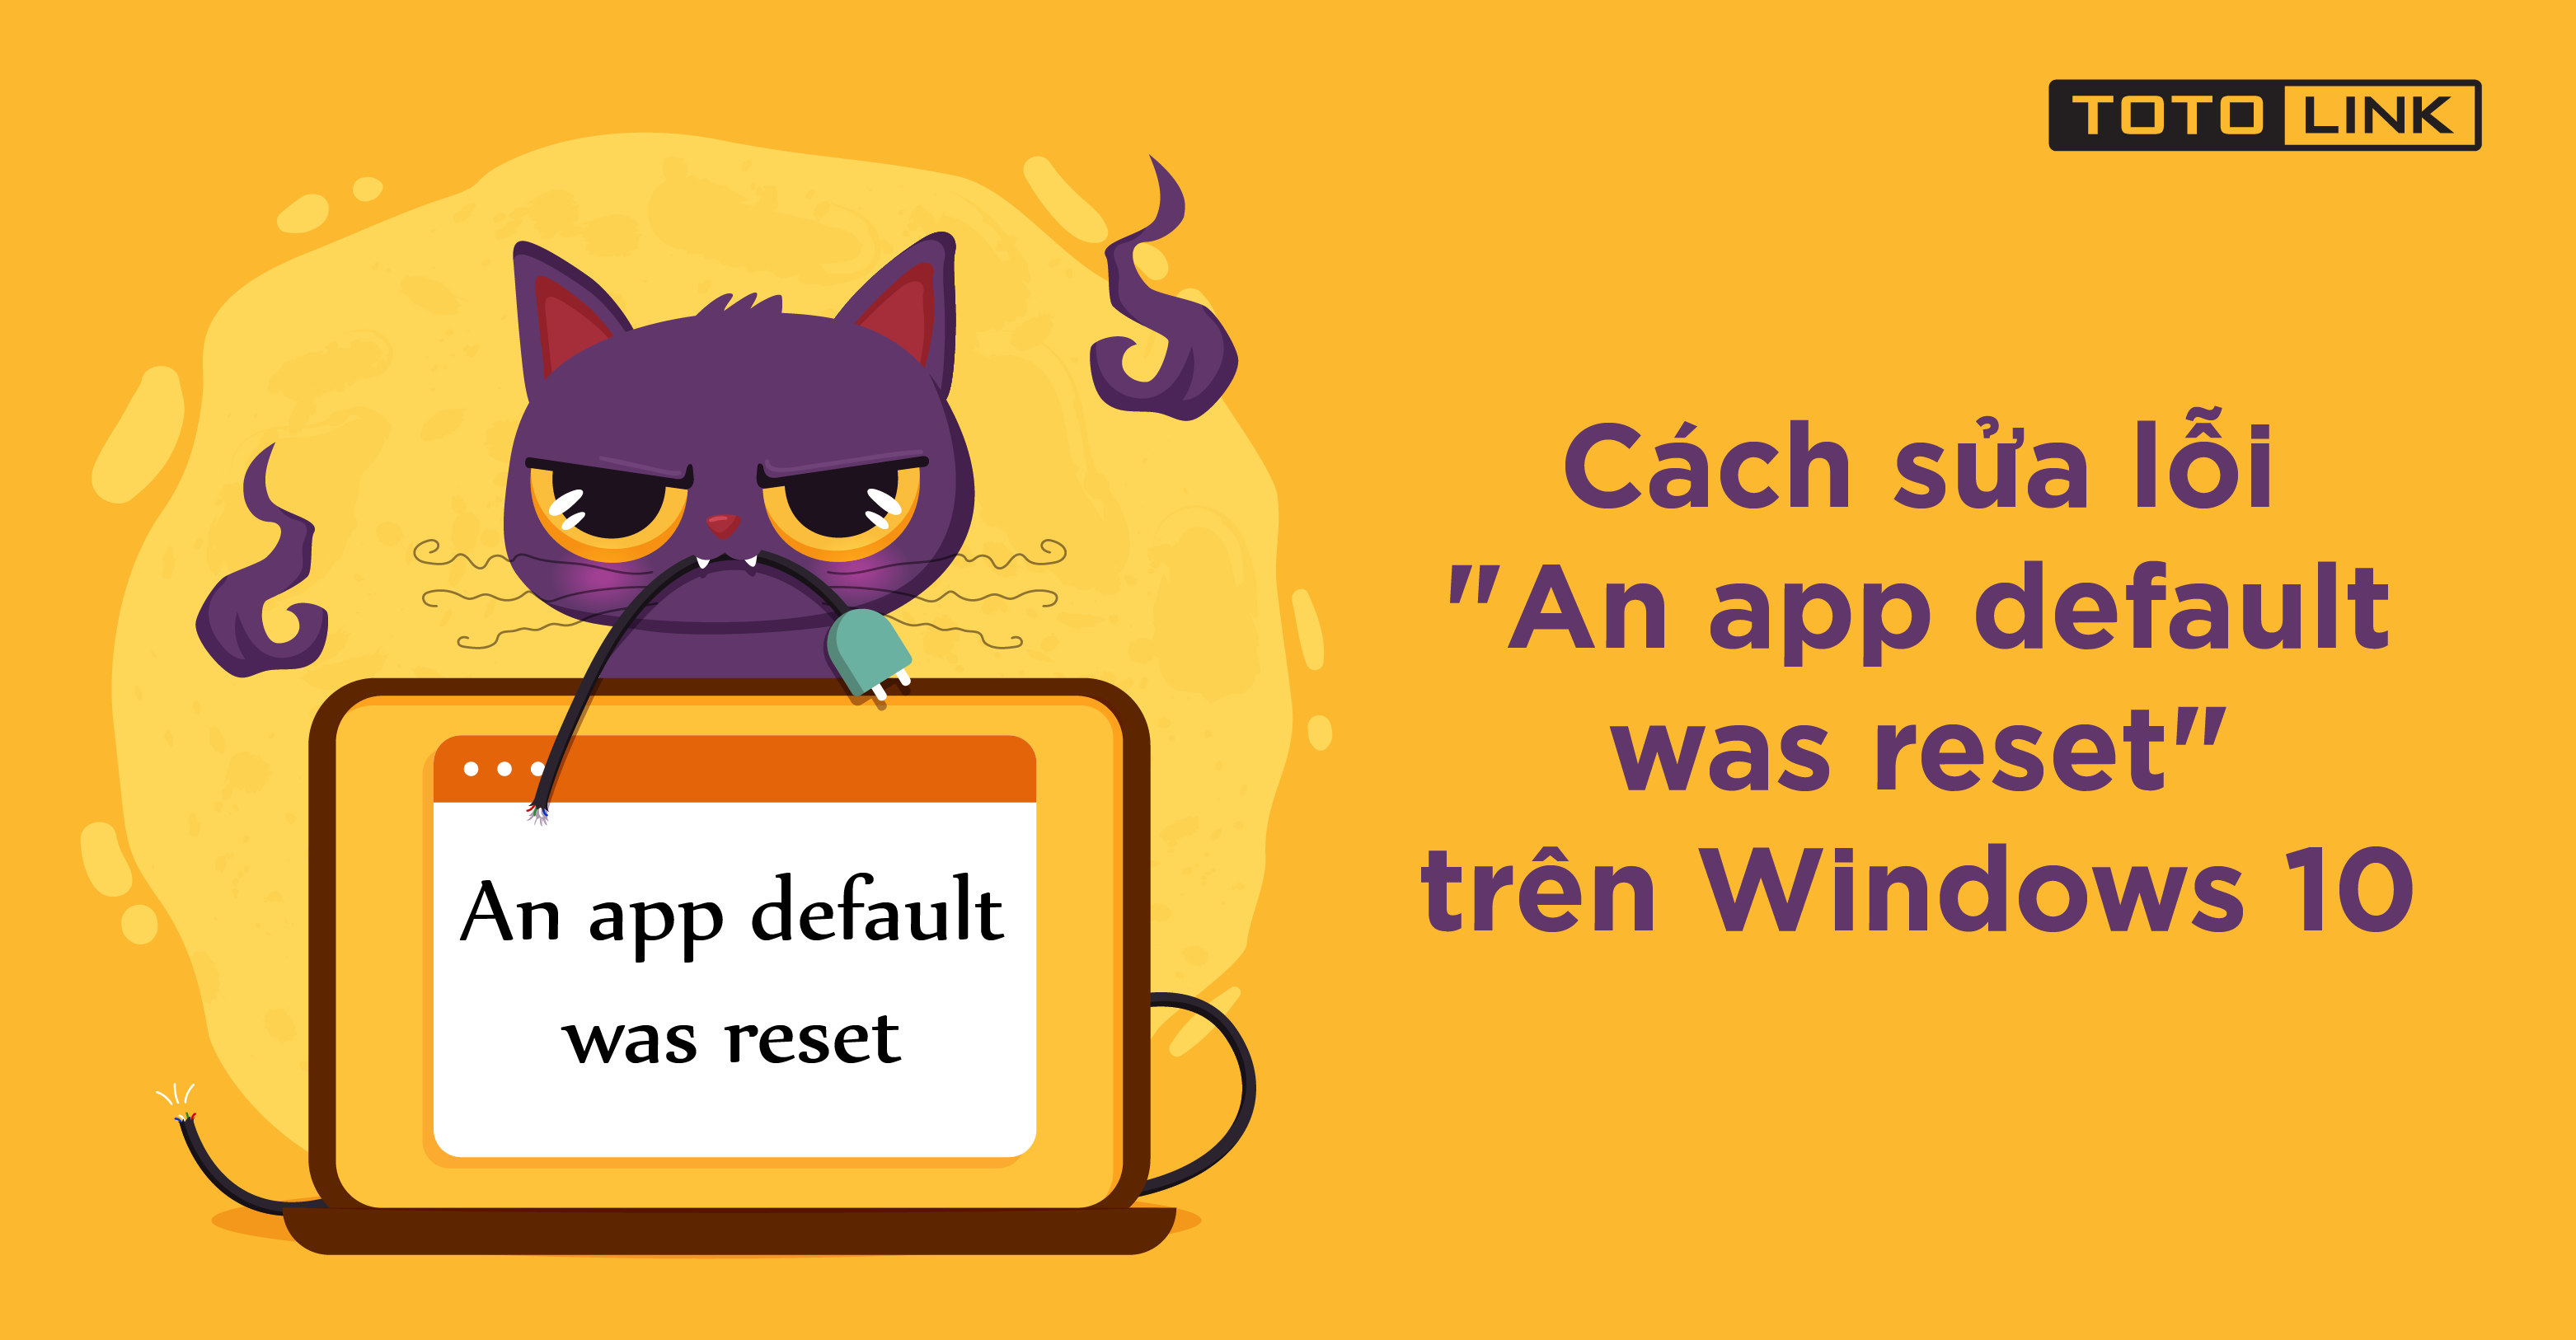 Hướng dẫn cách sửa lỗi "An app default was reset" trên Windows 10